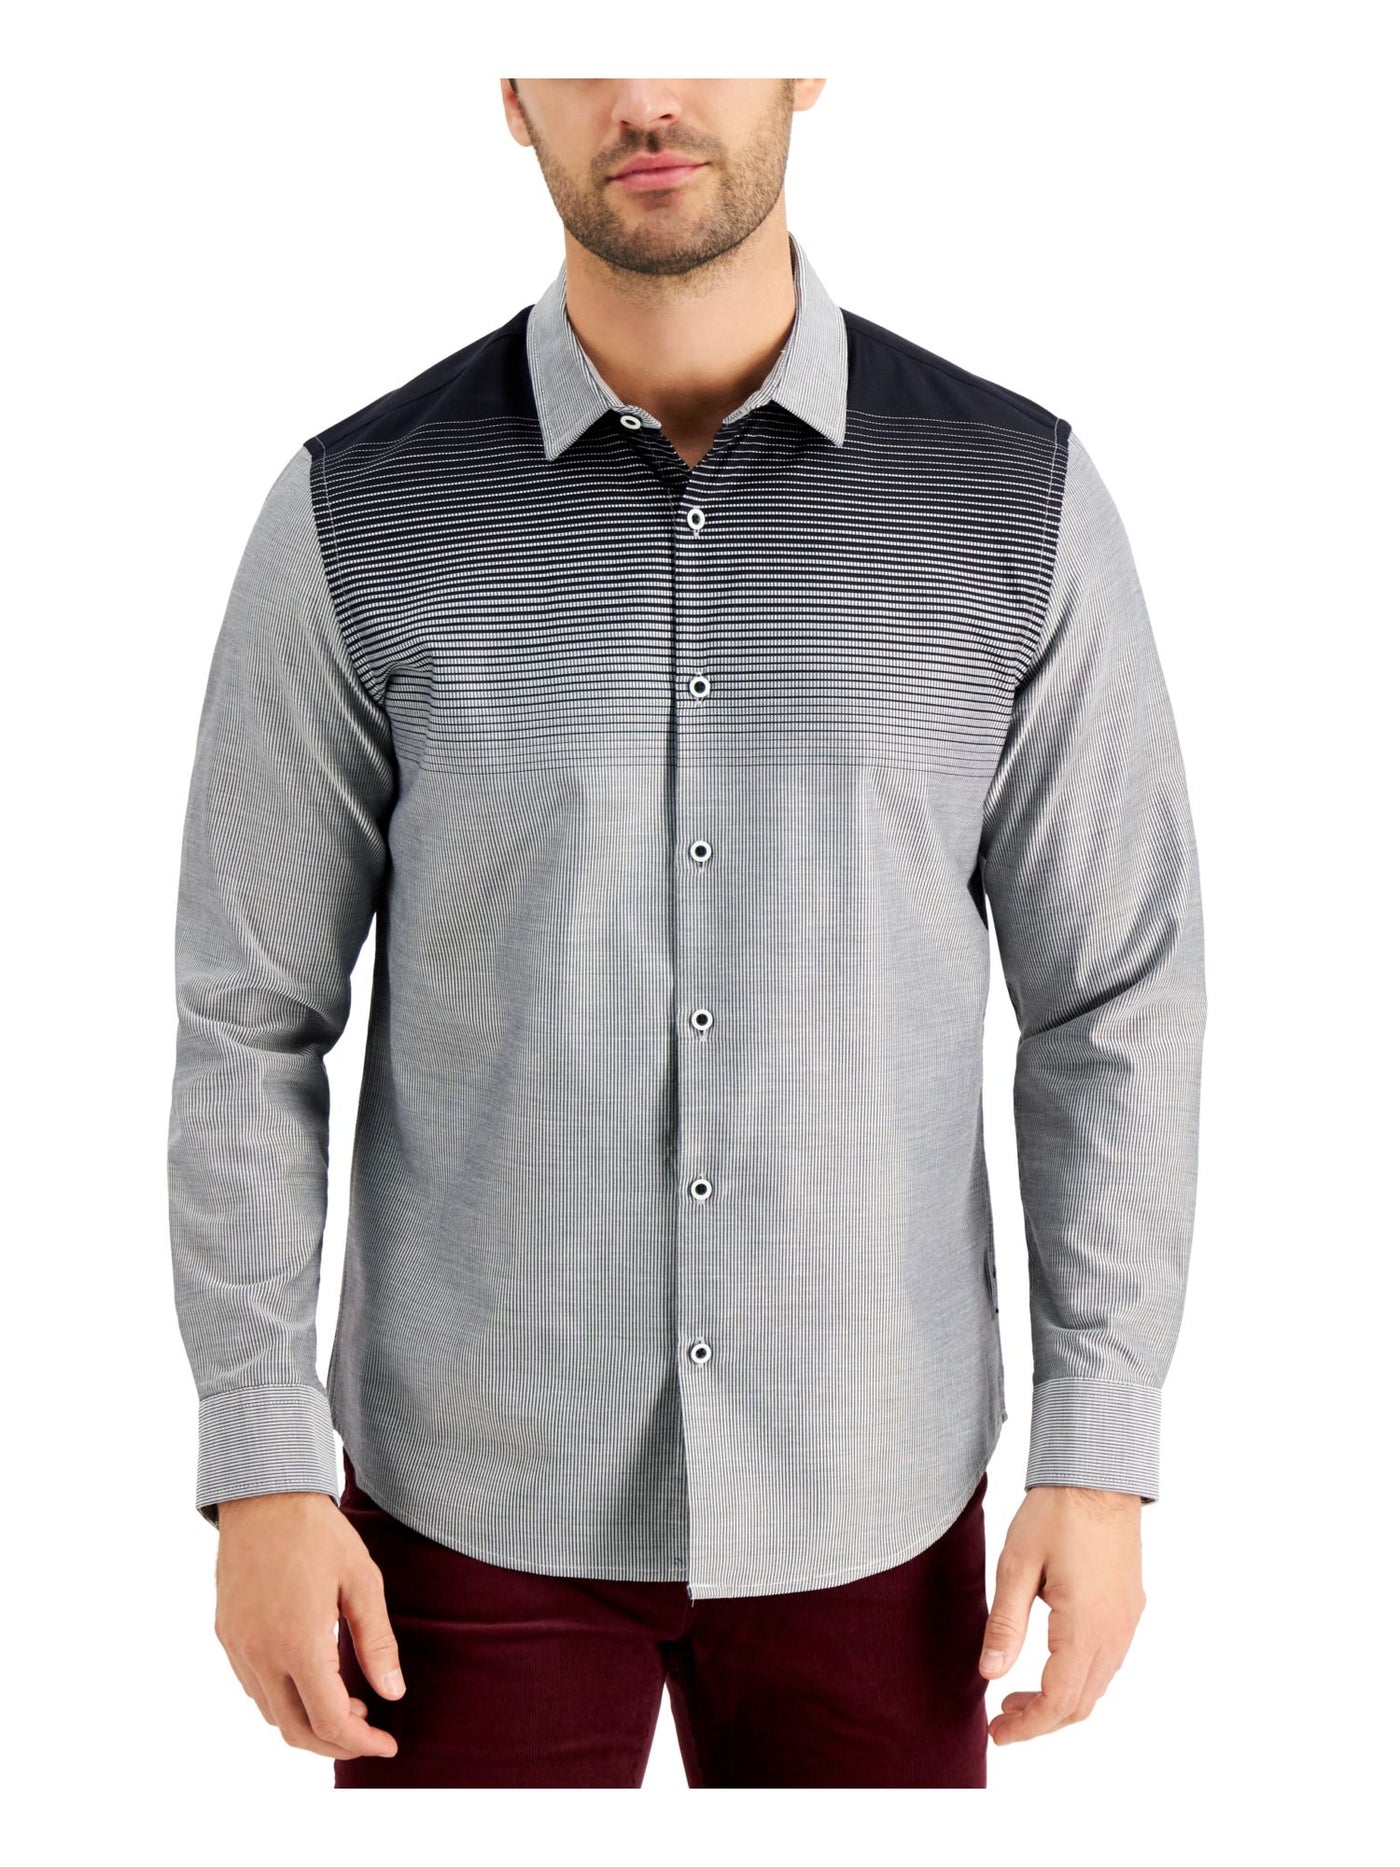 ALFANI Mens Gray Printed Point Collar Classic Fit Button Down Cotton Blend Cotton Blend Shirt S